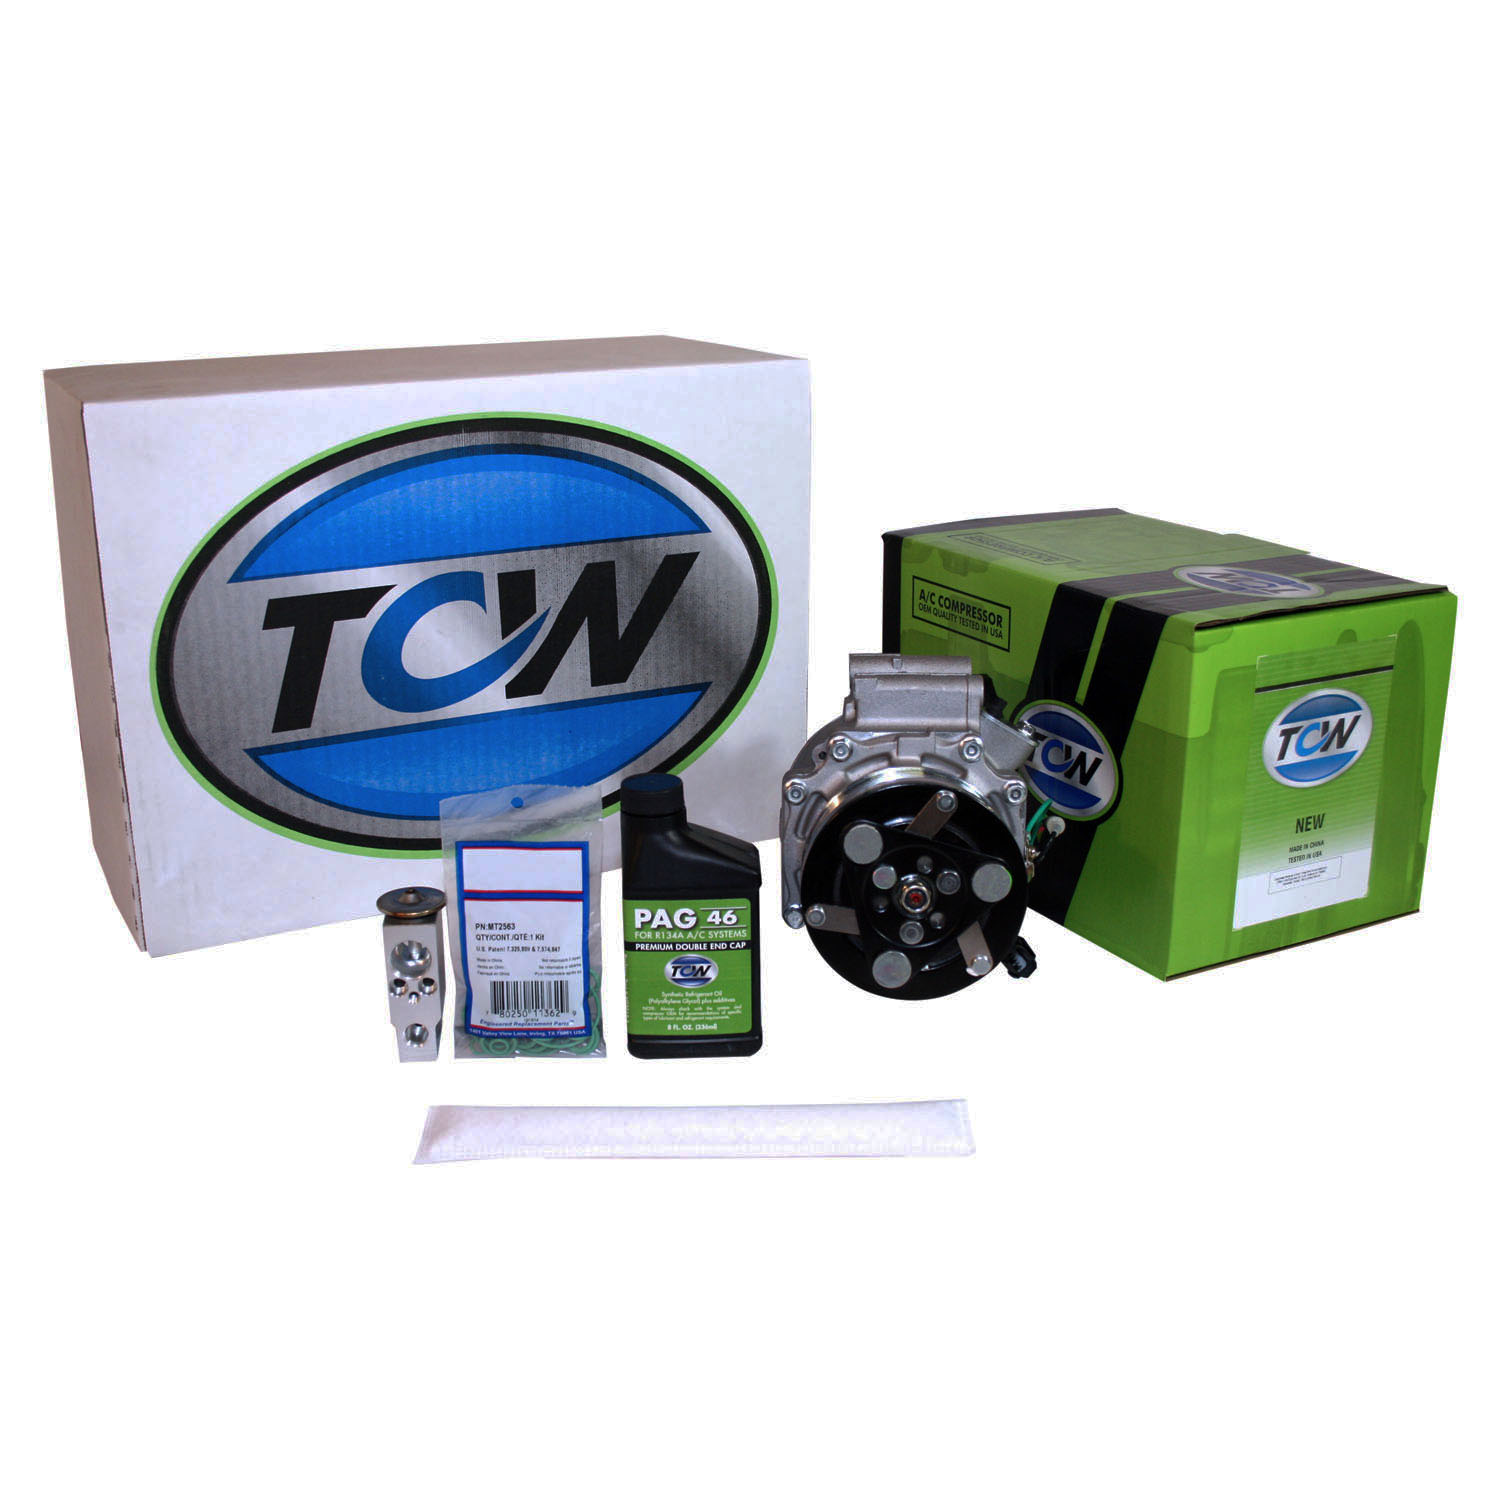 TCW Vehicle A/C Kit K1000206N New